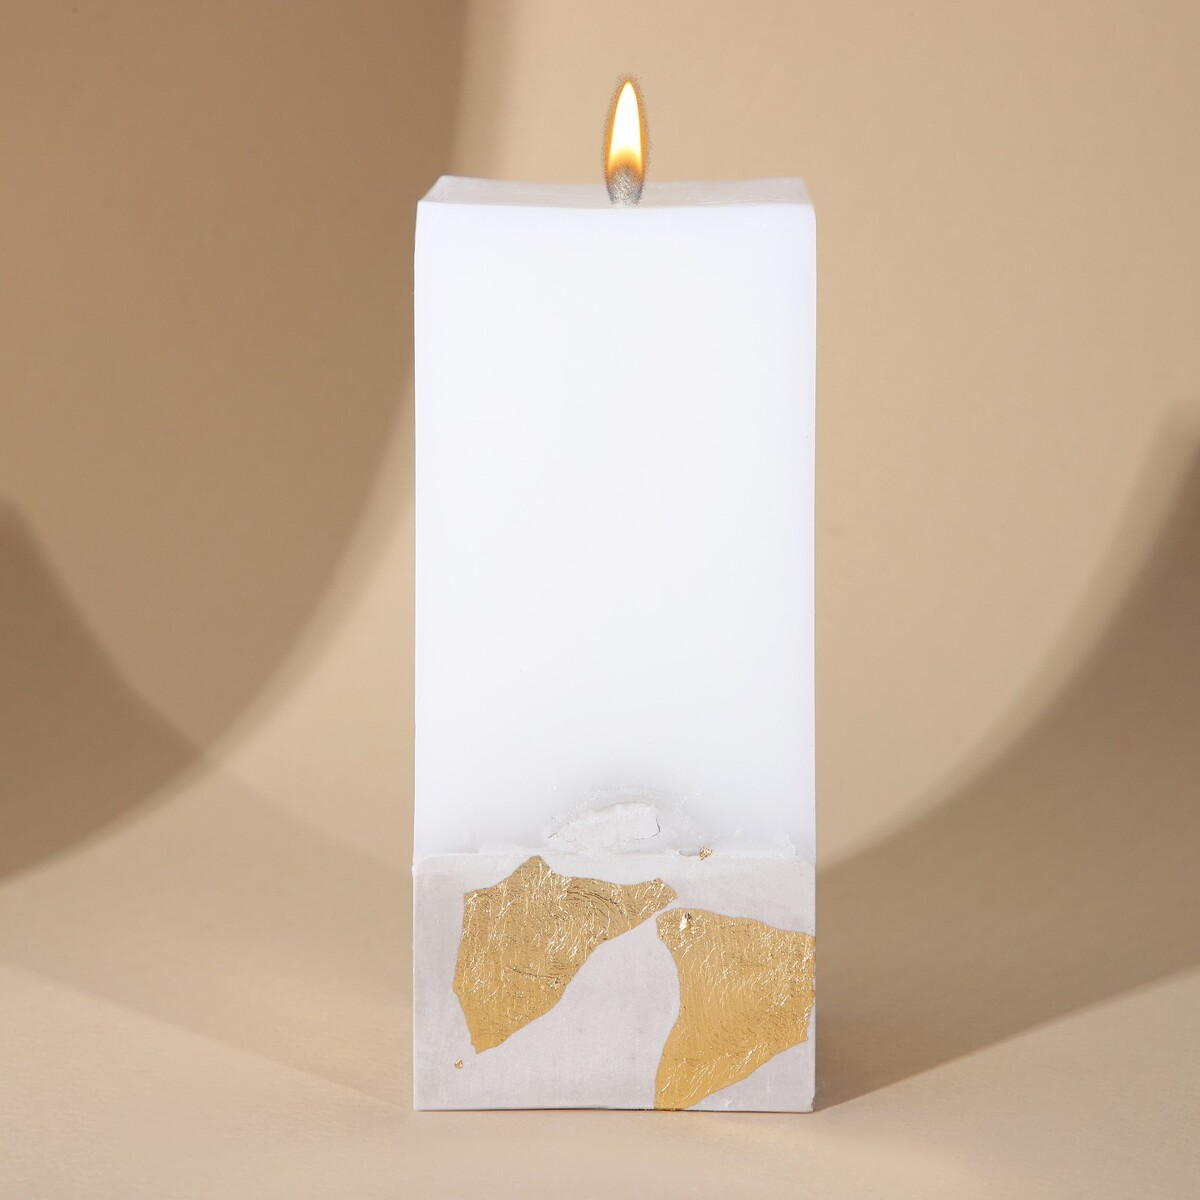 Свеча интерьерная белая с бетоном (поталь), 6 х 6 х 14 см свеча интерьерная белая с бетоном 5 х 5 х17 см